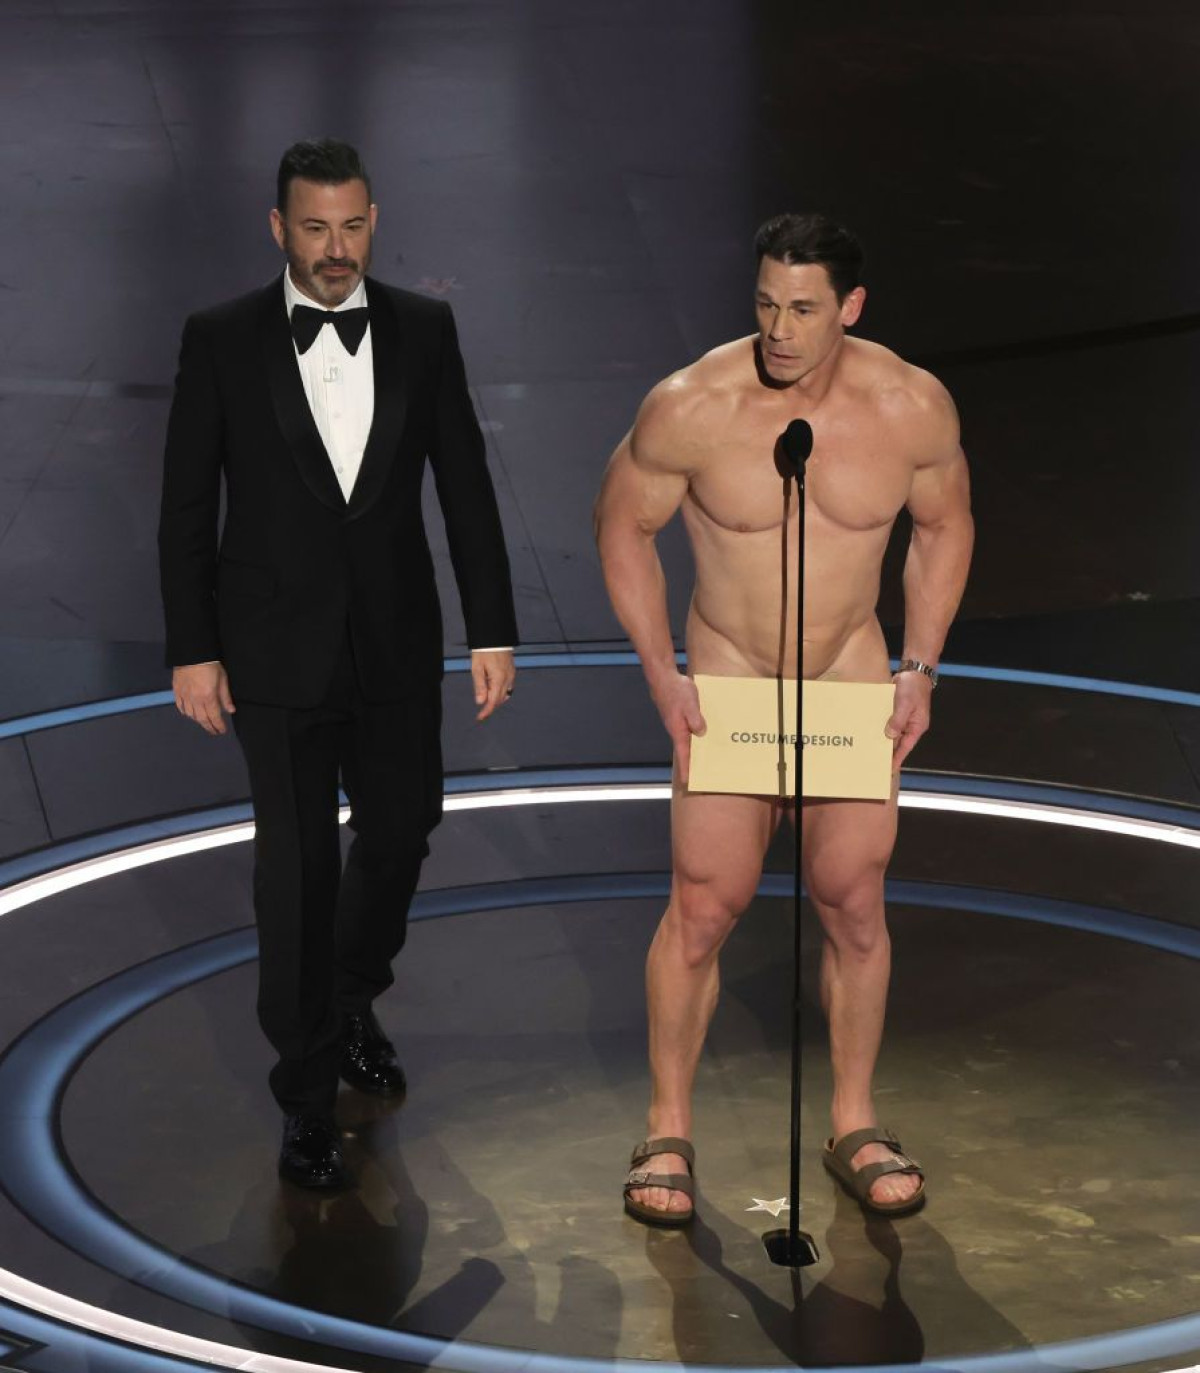 John Cena walked onstage naked